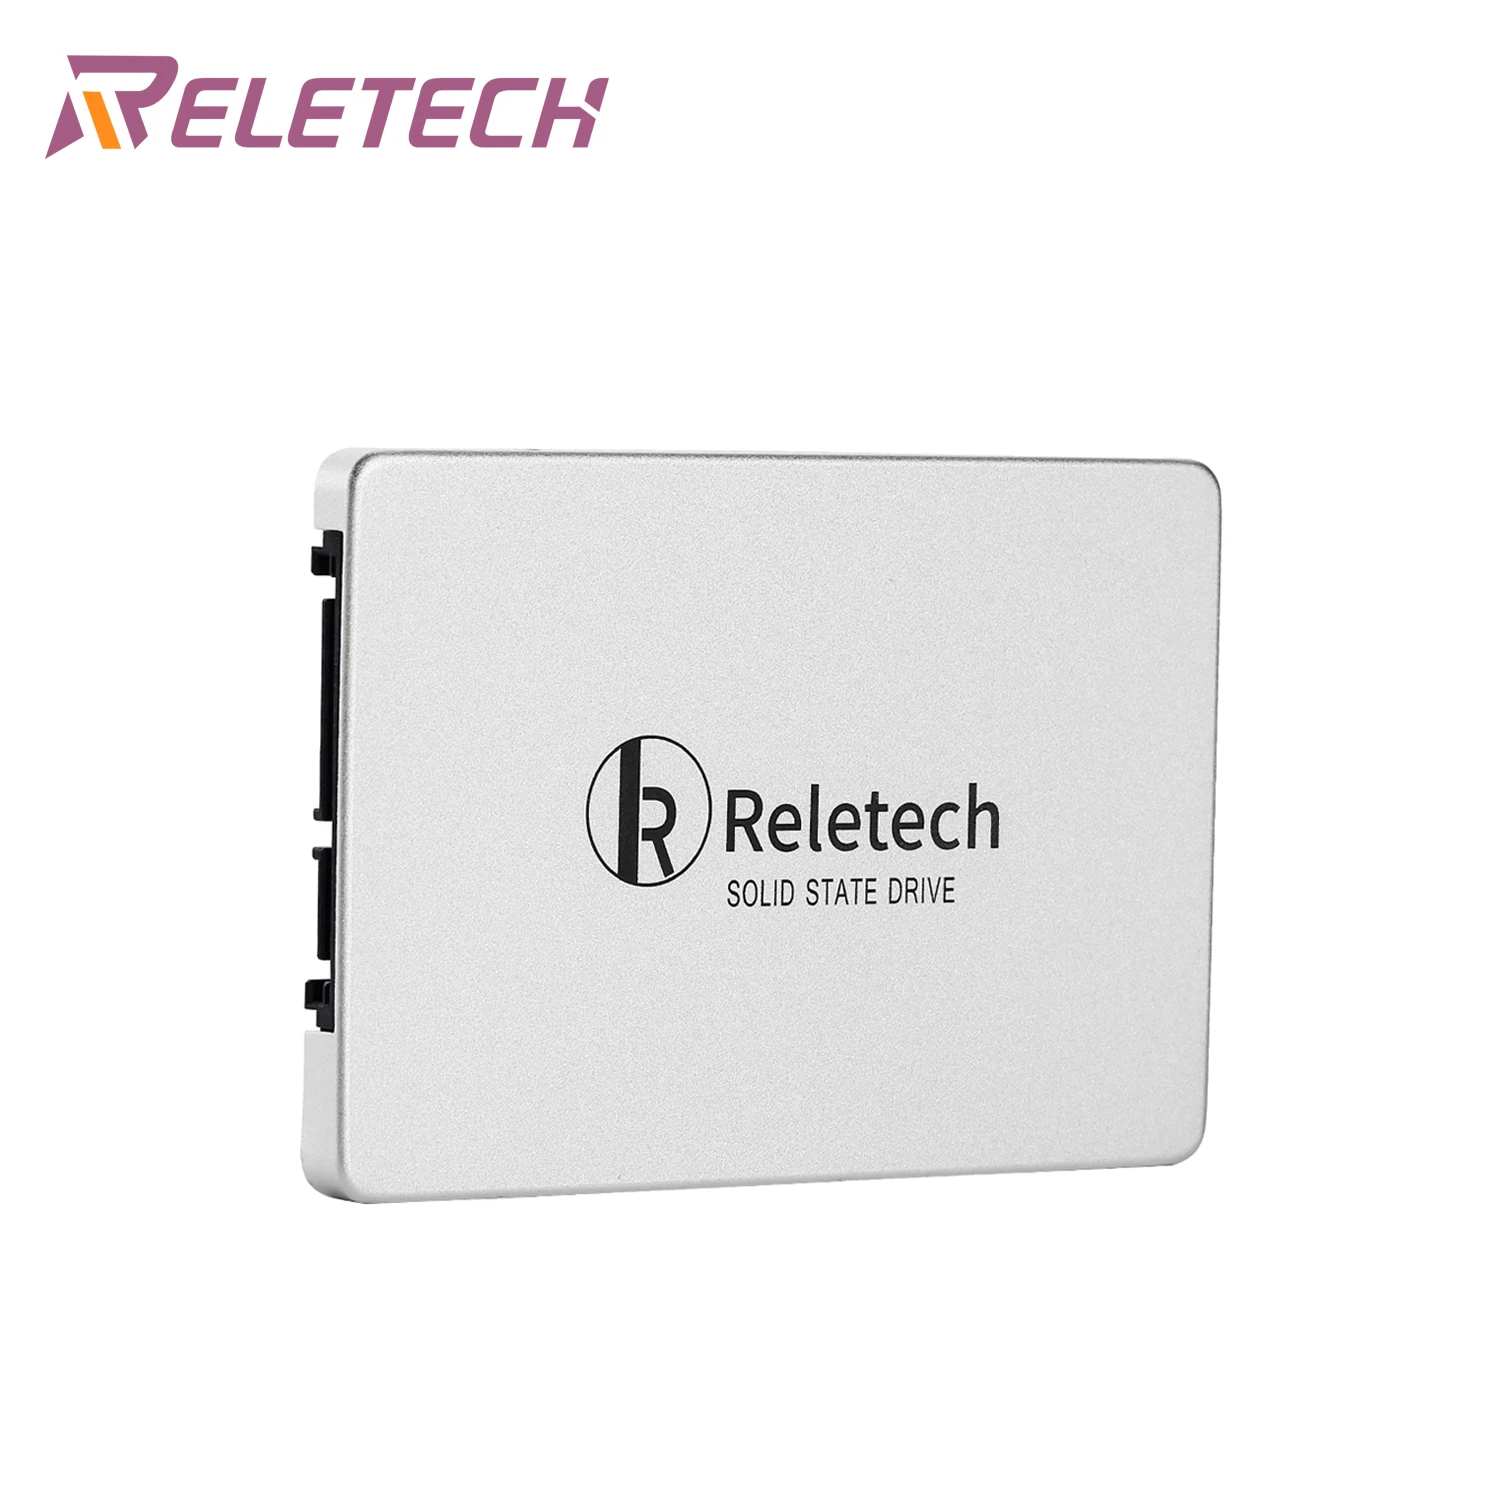 Reletech P400 SATA solid state drive 128GB 256GB 512GB 1TB SATA3 2.5 inch internal solid state drive for laptop desktop